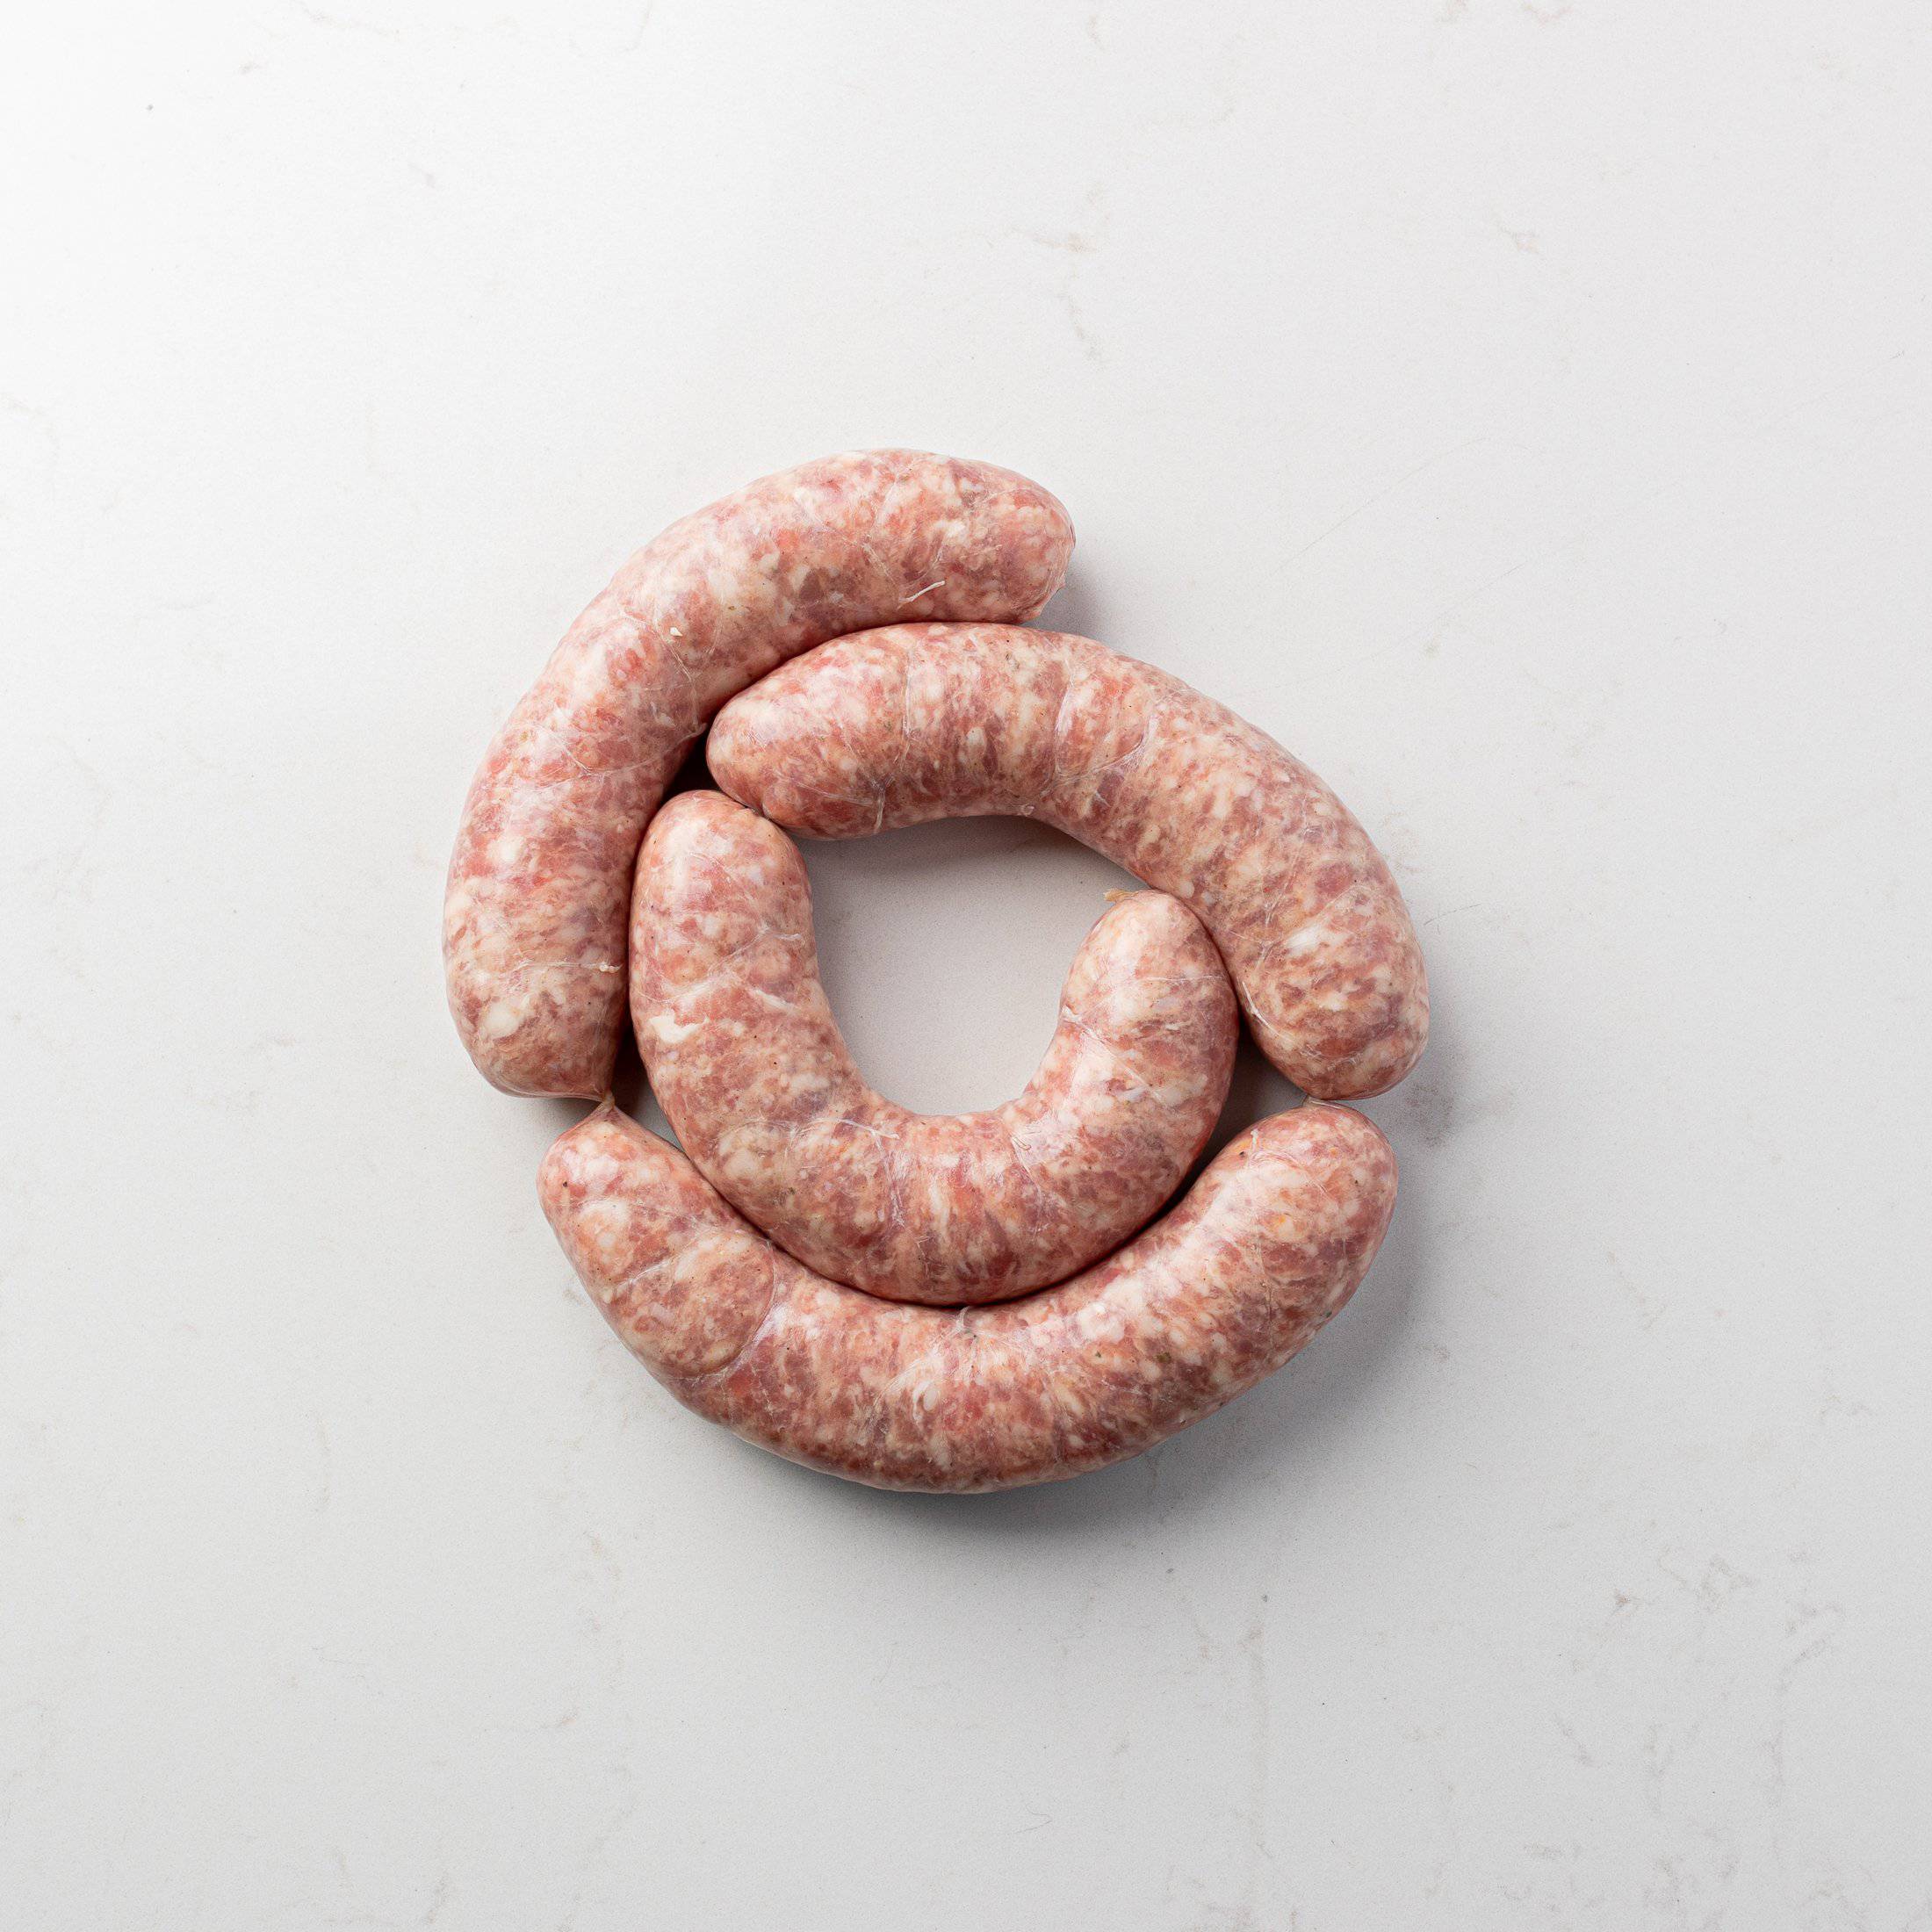  Bratwurst Hintergrundbild 2200x2200. Hand Twisted Bratwurst Sausage: Order For Delivery Or Pick Up